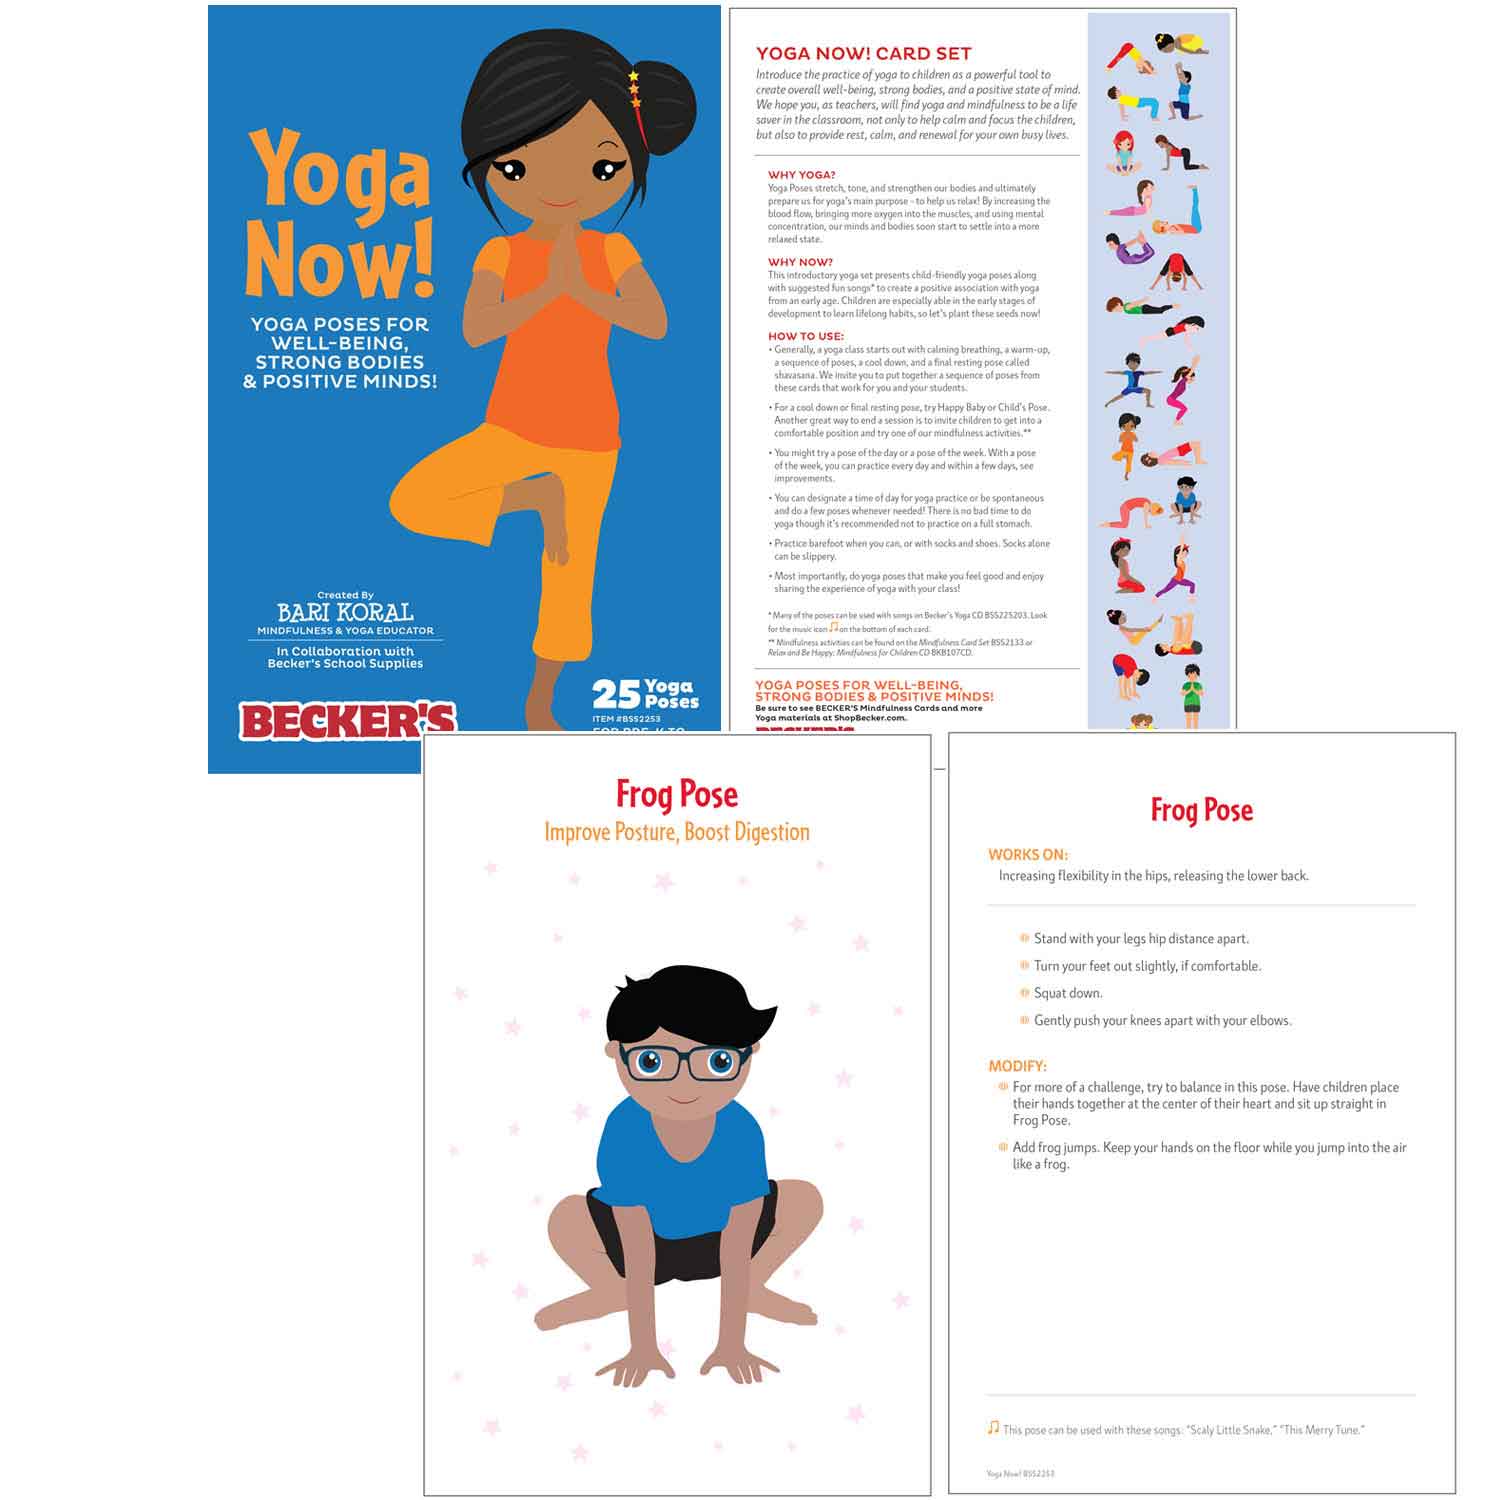 Becker's Yoga Now Card Set, Preschool Yoga Poses